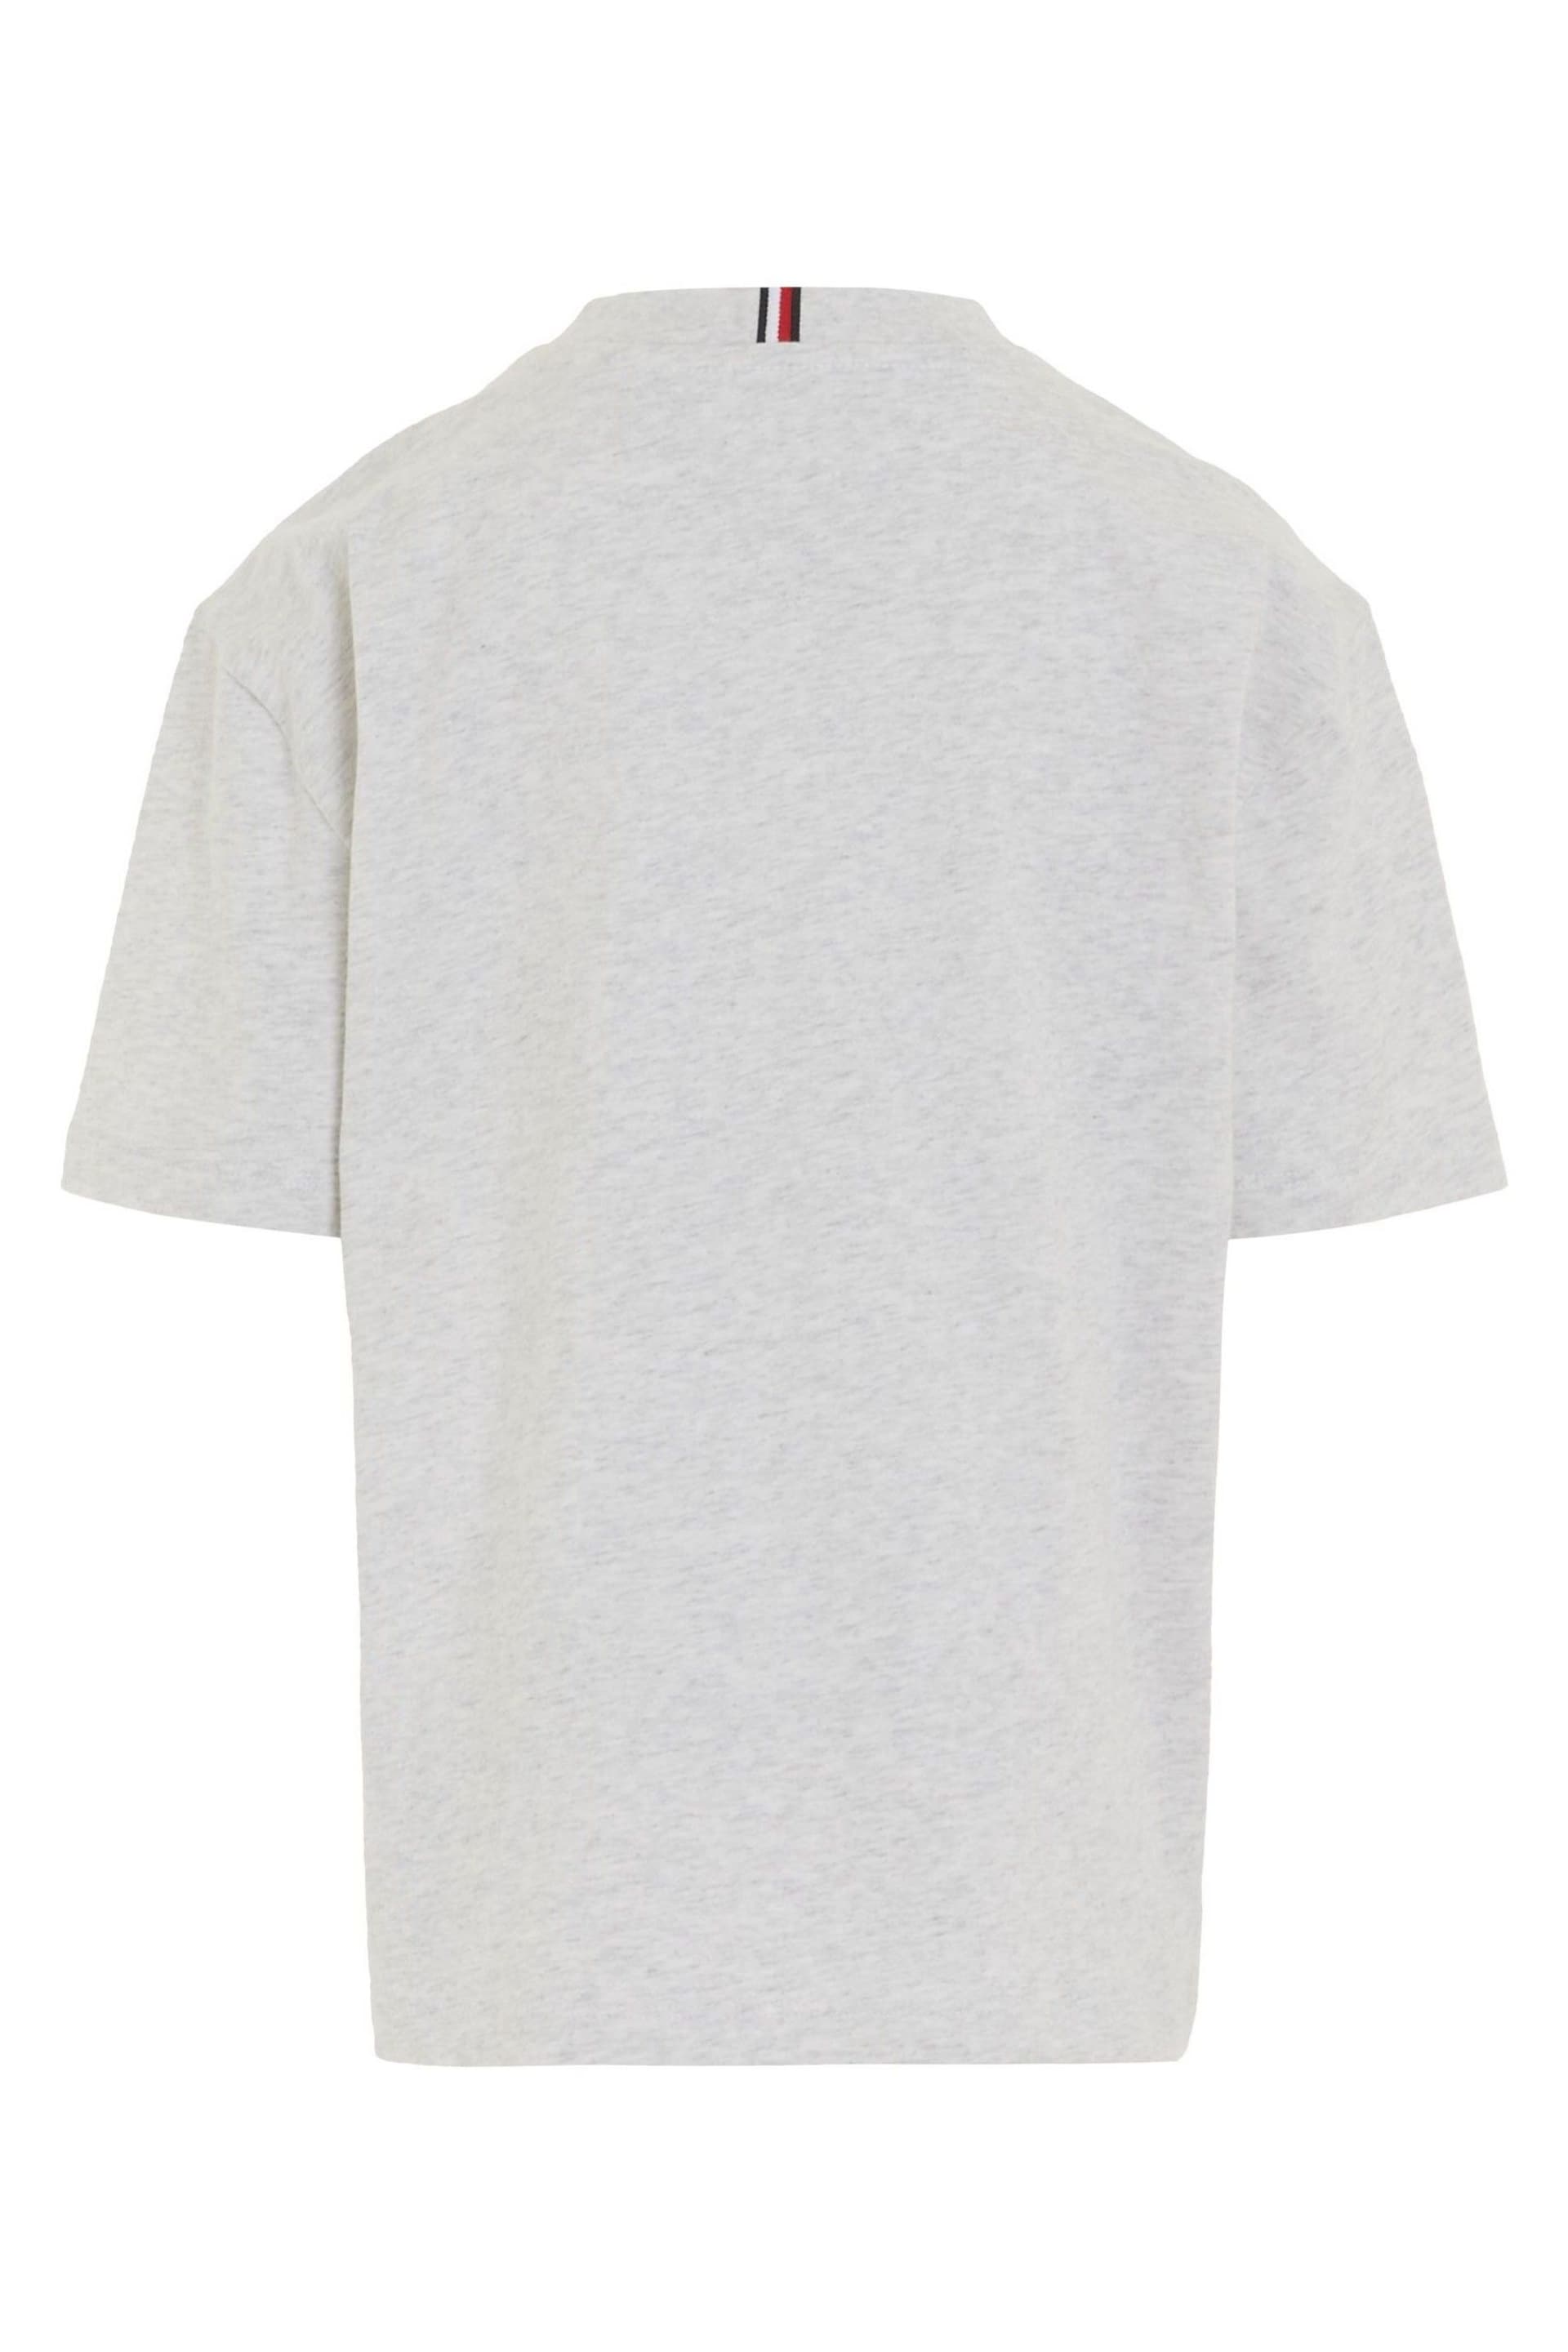 Tommy Hilfiger Grey Stripe Logo T-Shirt - Image 5 of 6